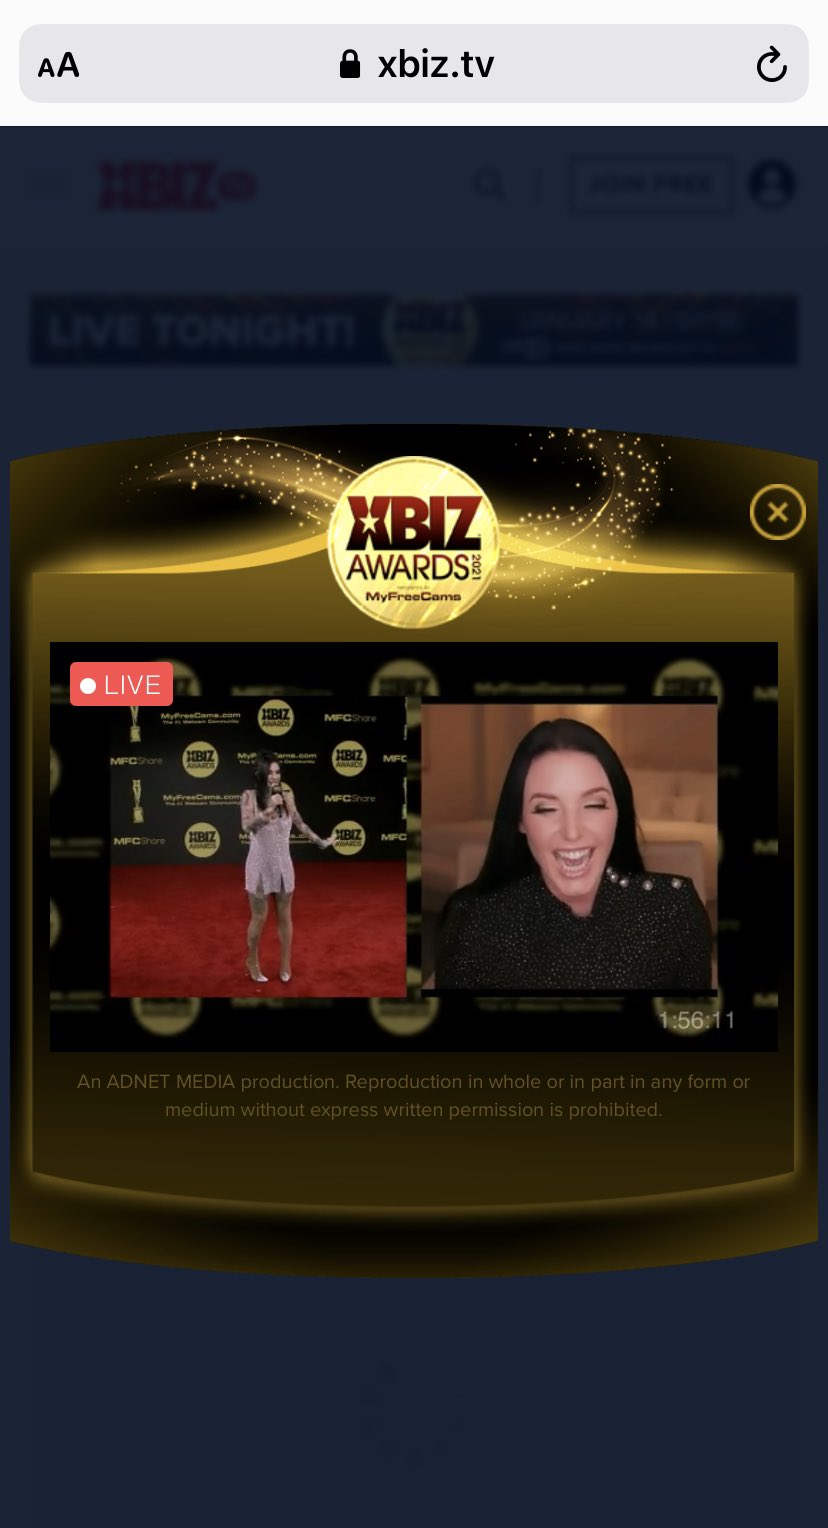 Live now! On @XBIZ watch the whole awards show live! Virtual ! I just saw some boobs😉❤️https://t.co/f0MYYFLsjE